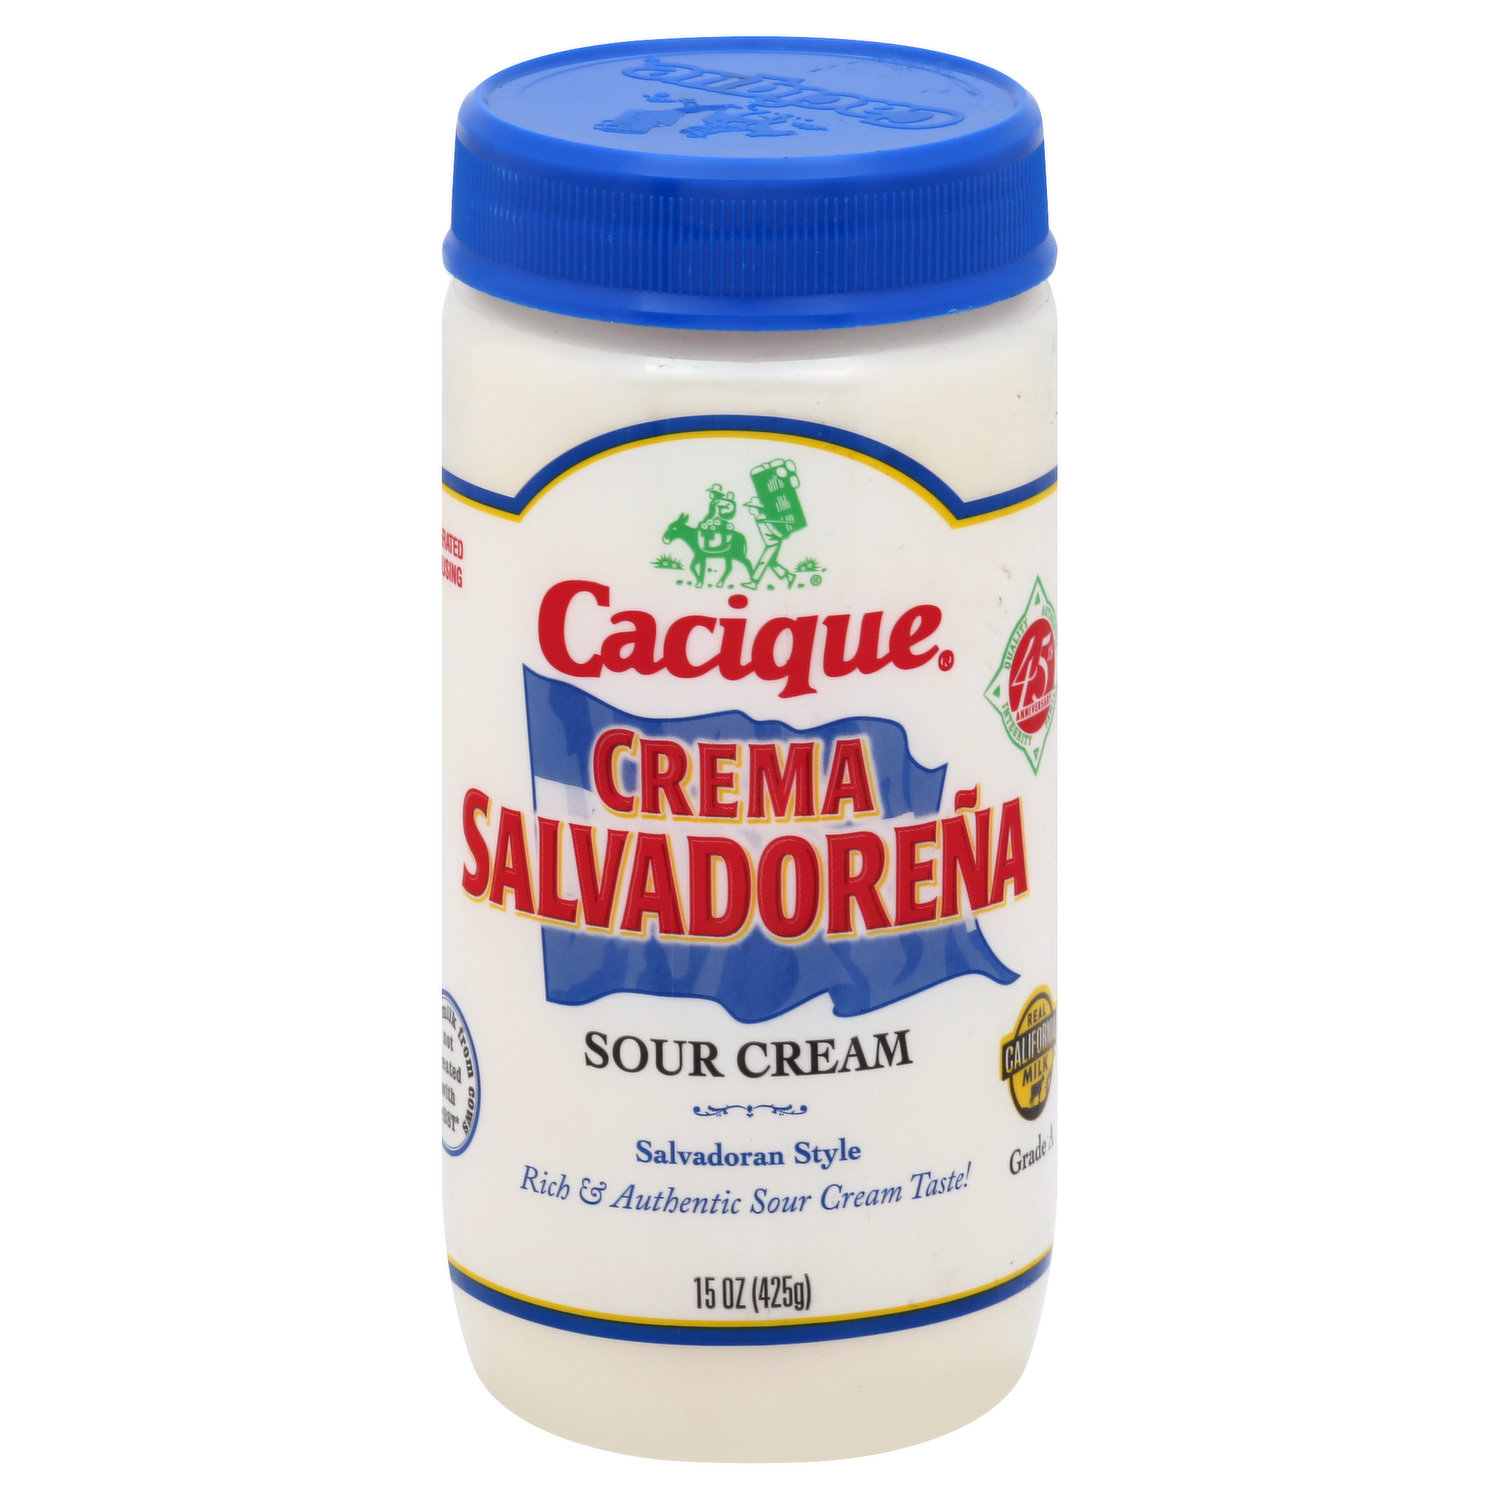 Cacique Table Cream, Crema Mexicana - Brookshire's